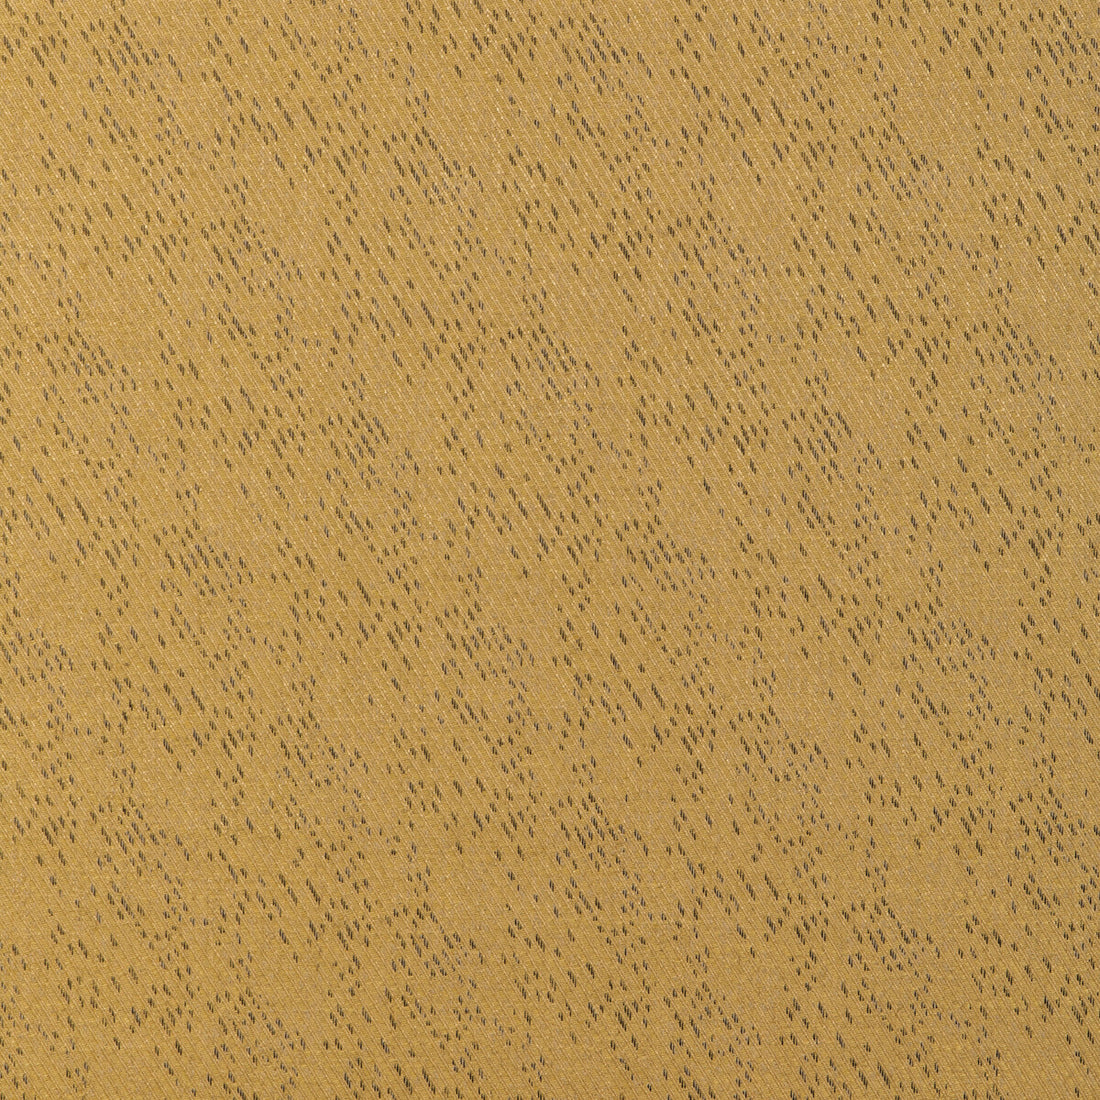 Hana fabric in glint color - pattern GWF-3800.411.0 - by Lee Jofa Modern in the Kelly Wearstler VIII collection